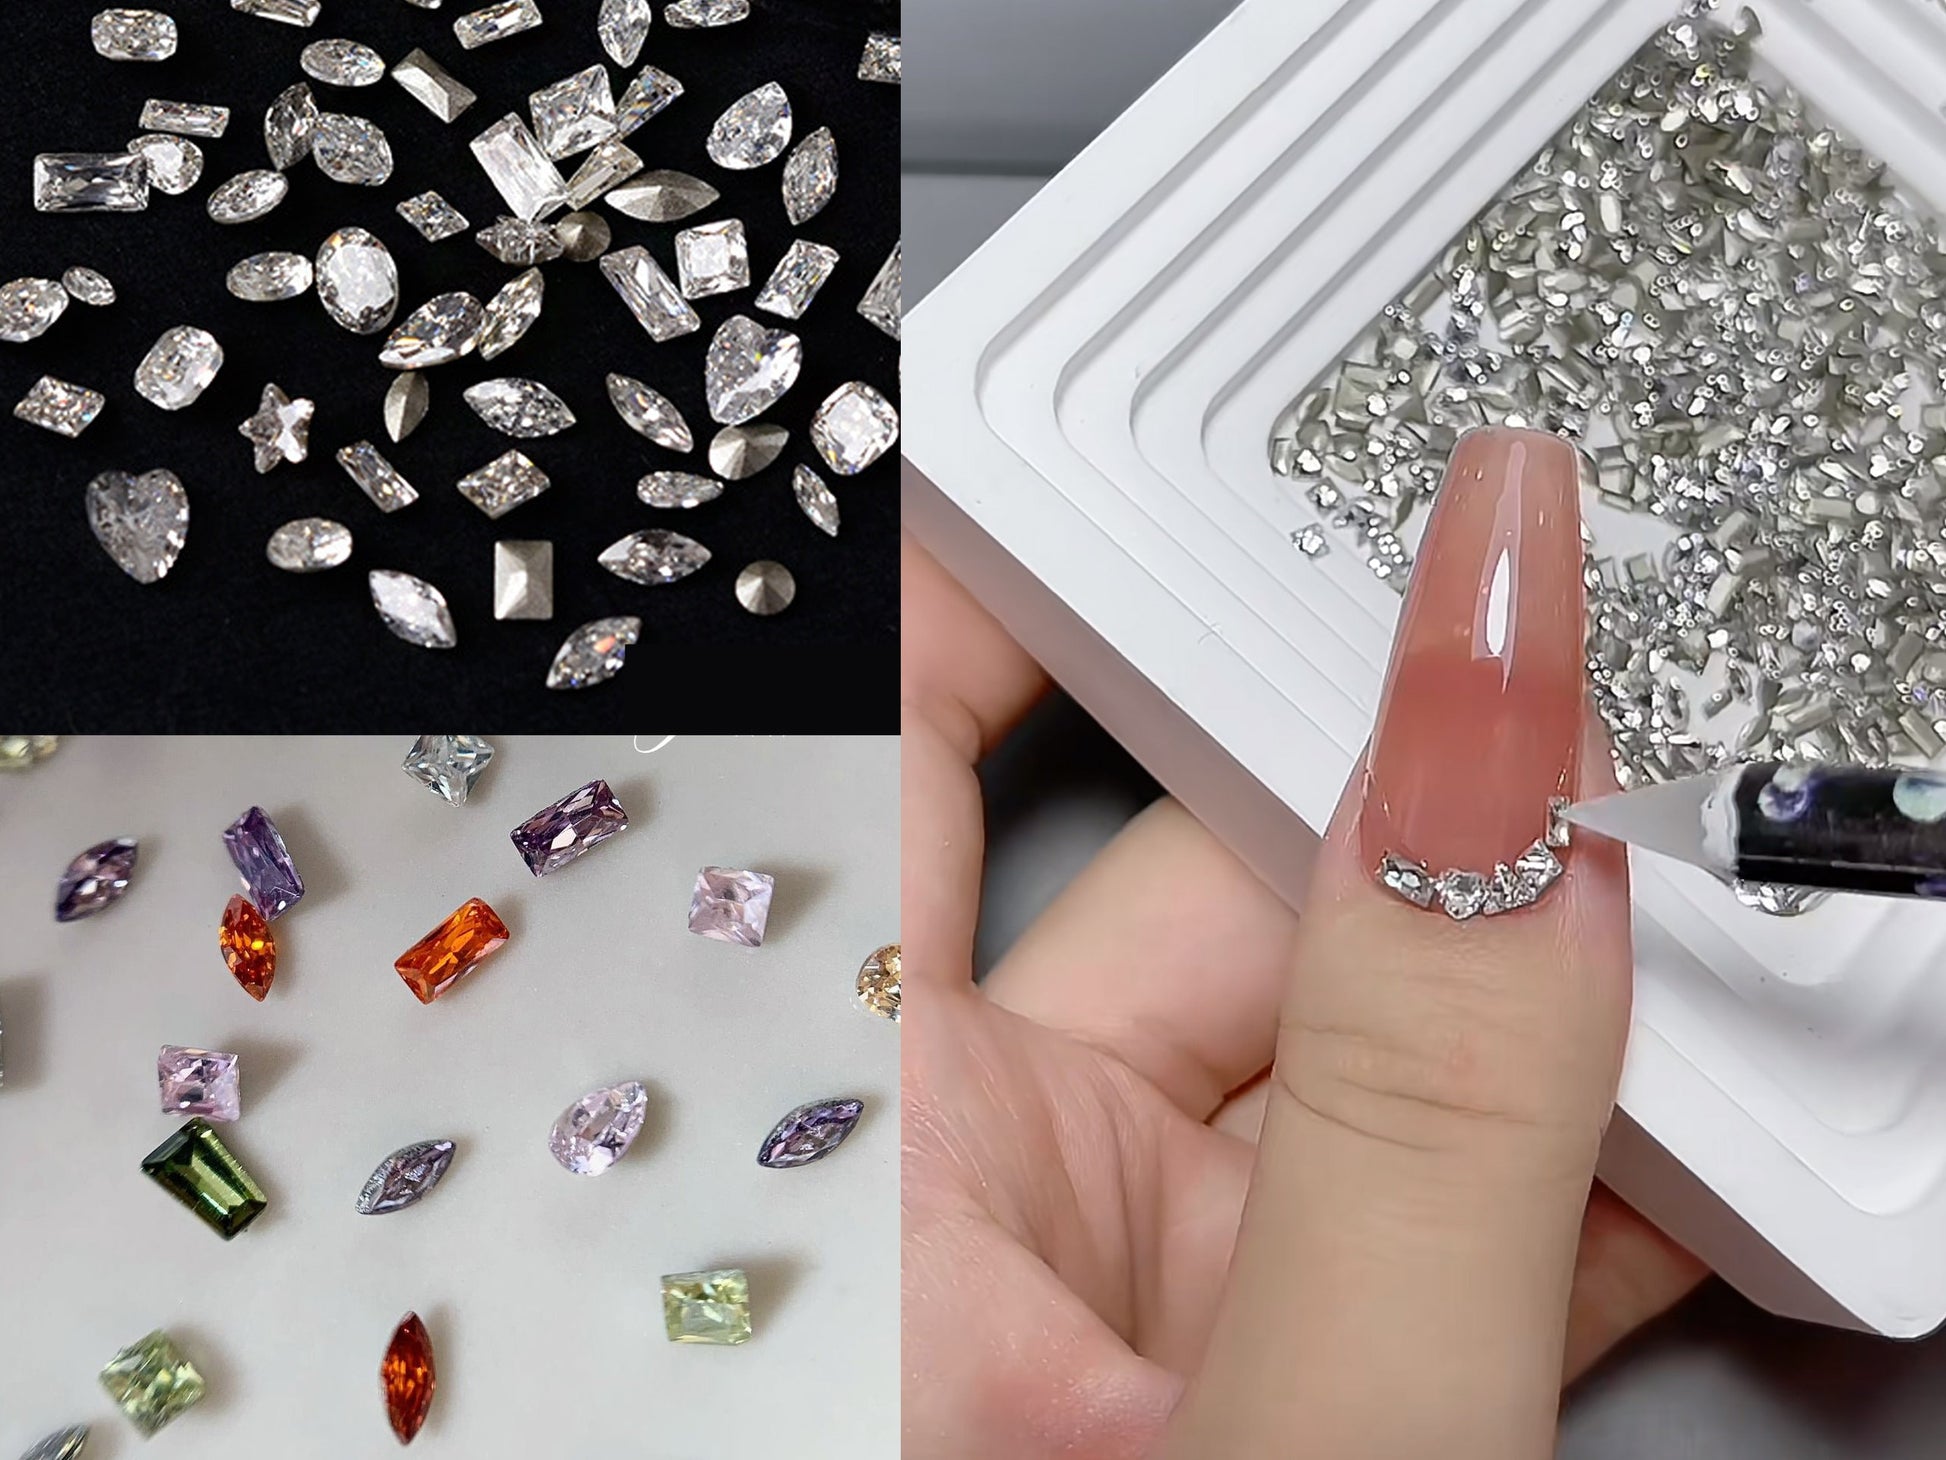 50pcs Mini Zircon Gemstones Nail Decal/ Blingbling Clear& Colorful Zircons Nails Jewelry Ornaments/ Versatile Elegant Manicure Studs